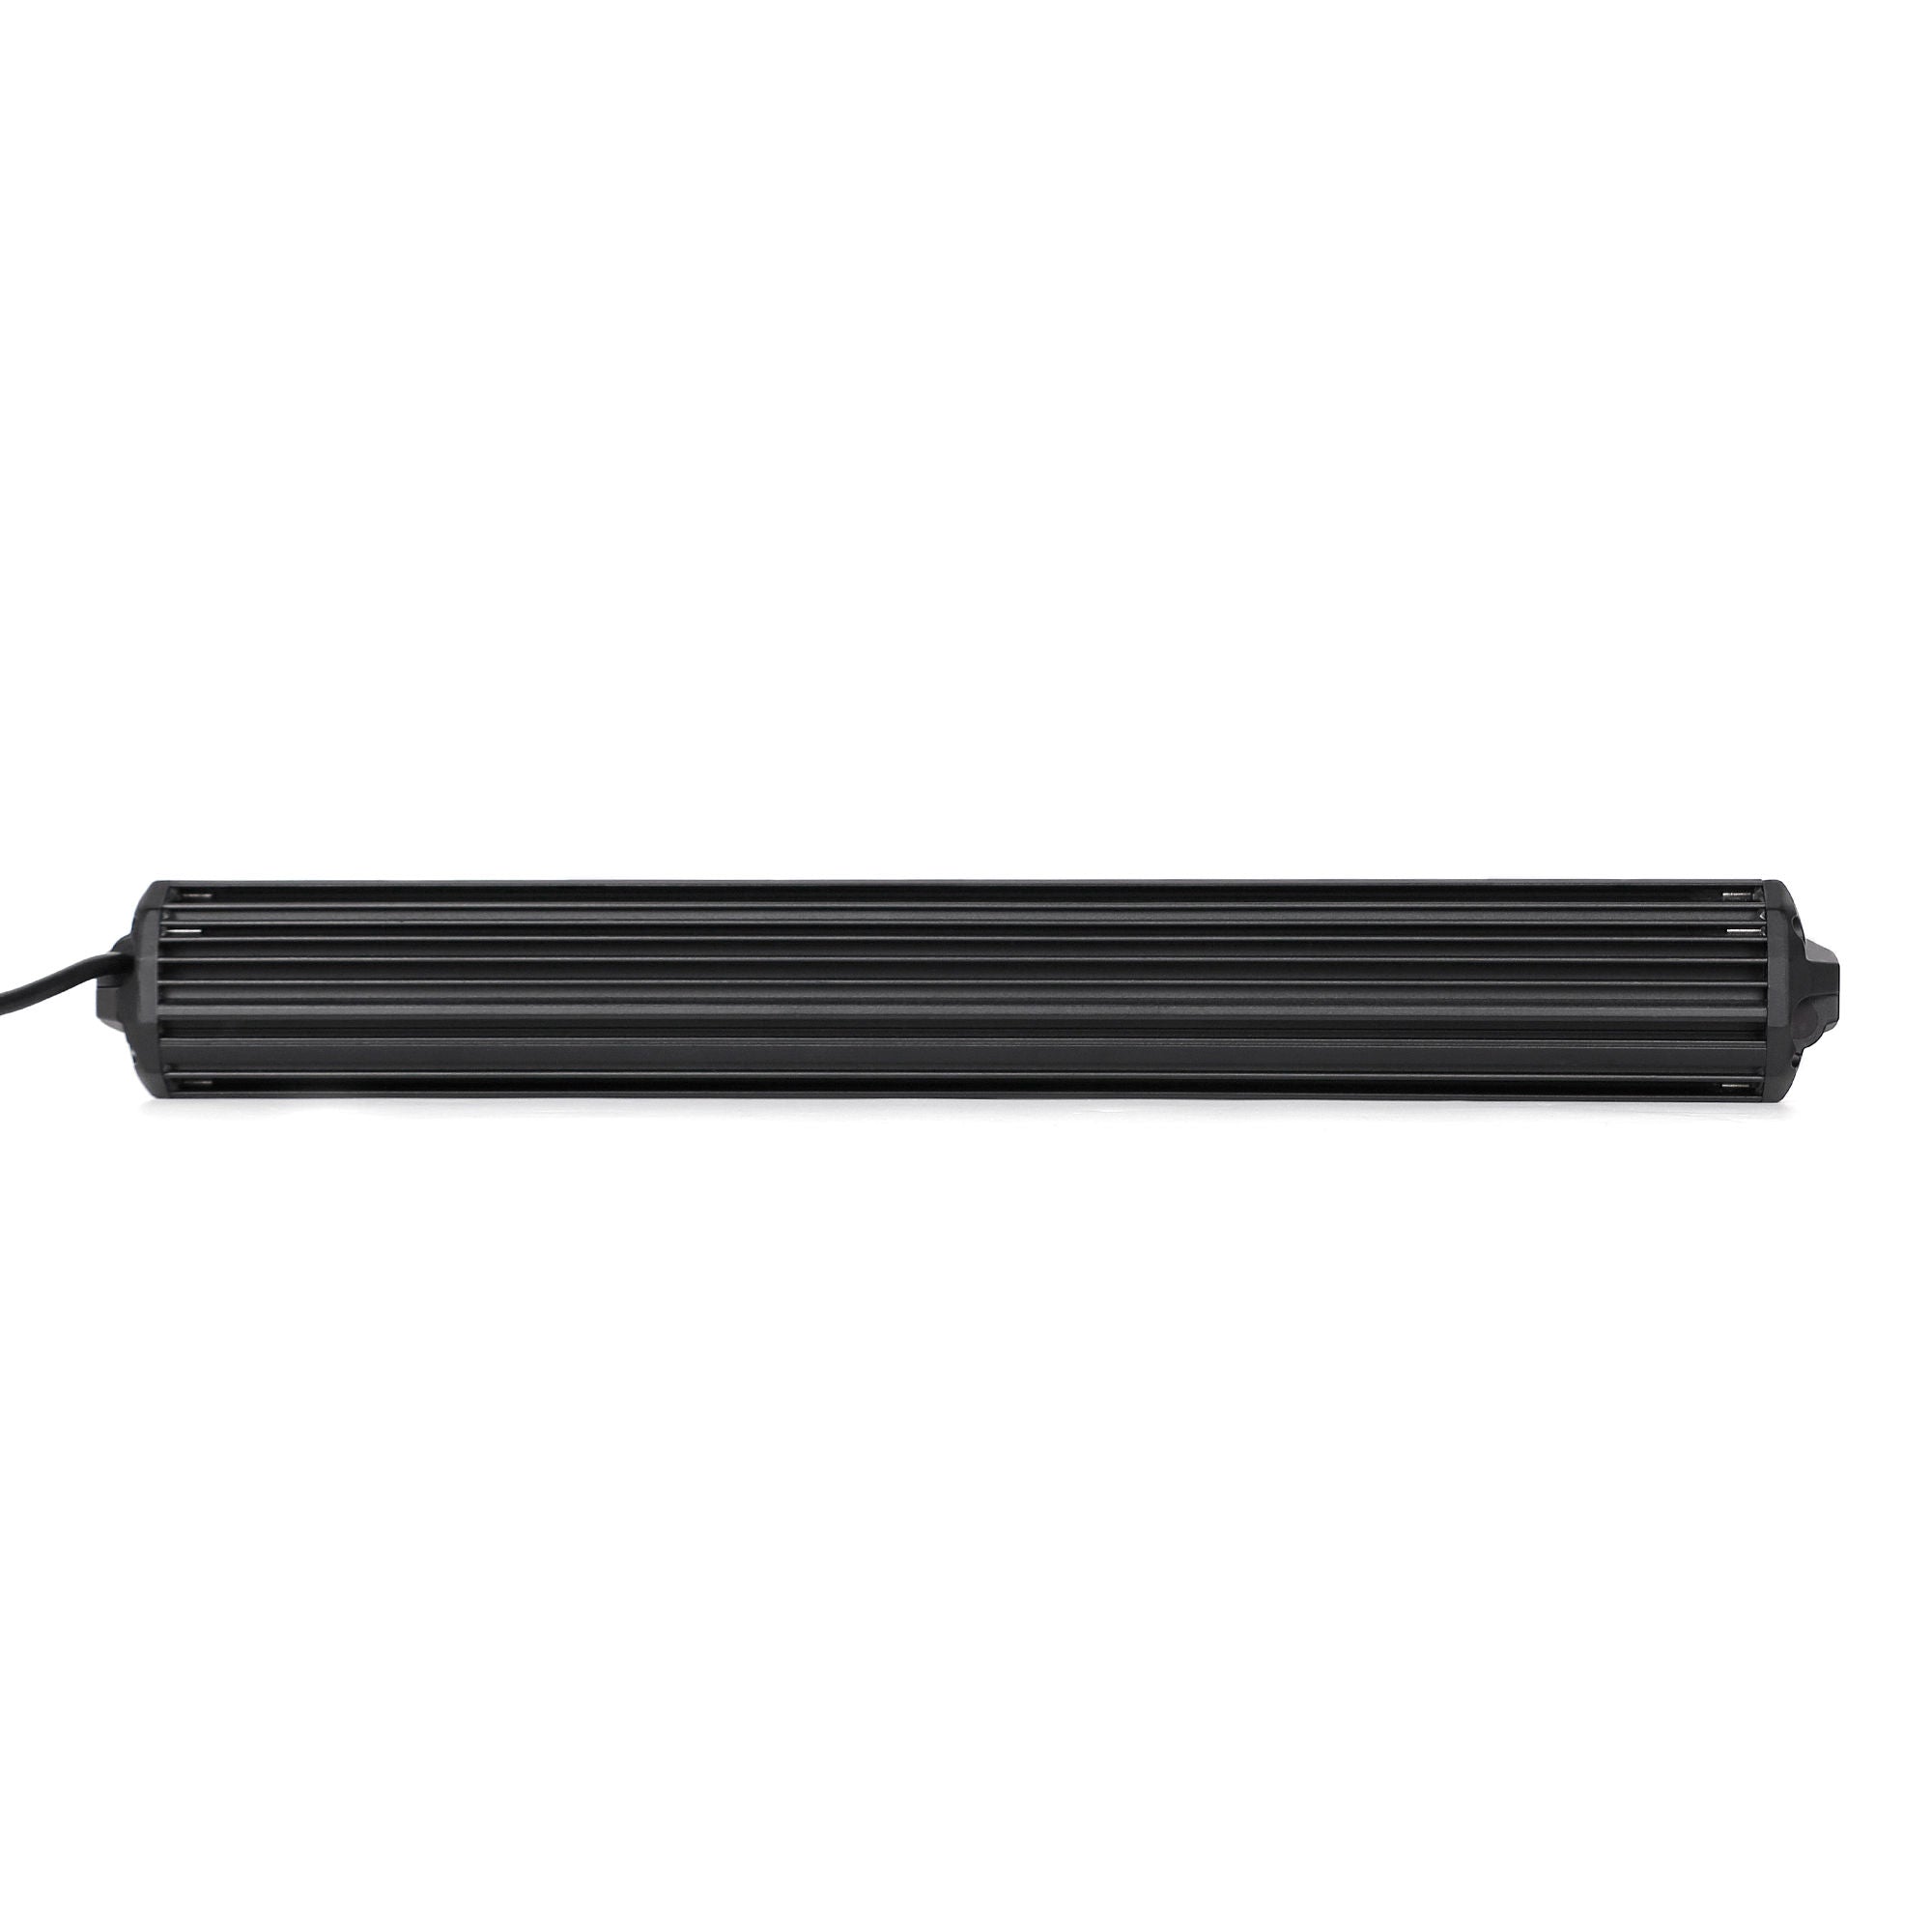 RTXOA49B810 - Dual Row Light Bar, 6W Osram, No Screw Front Frame, Reflector, Combo, 20", 7982